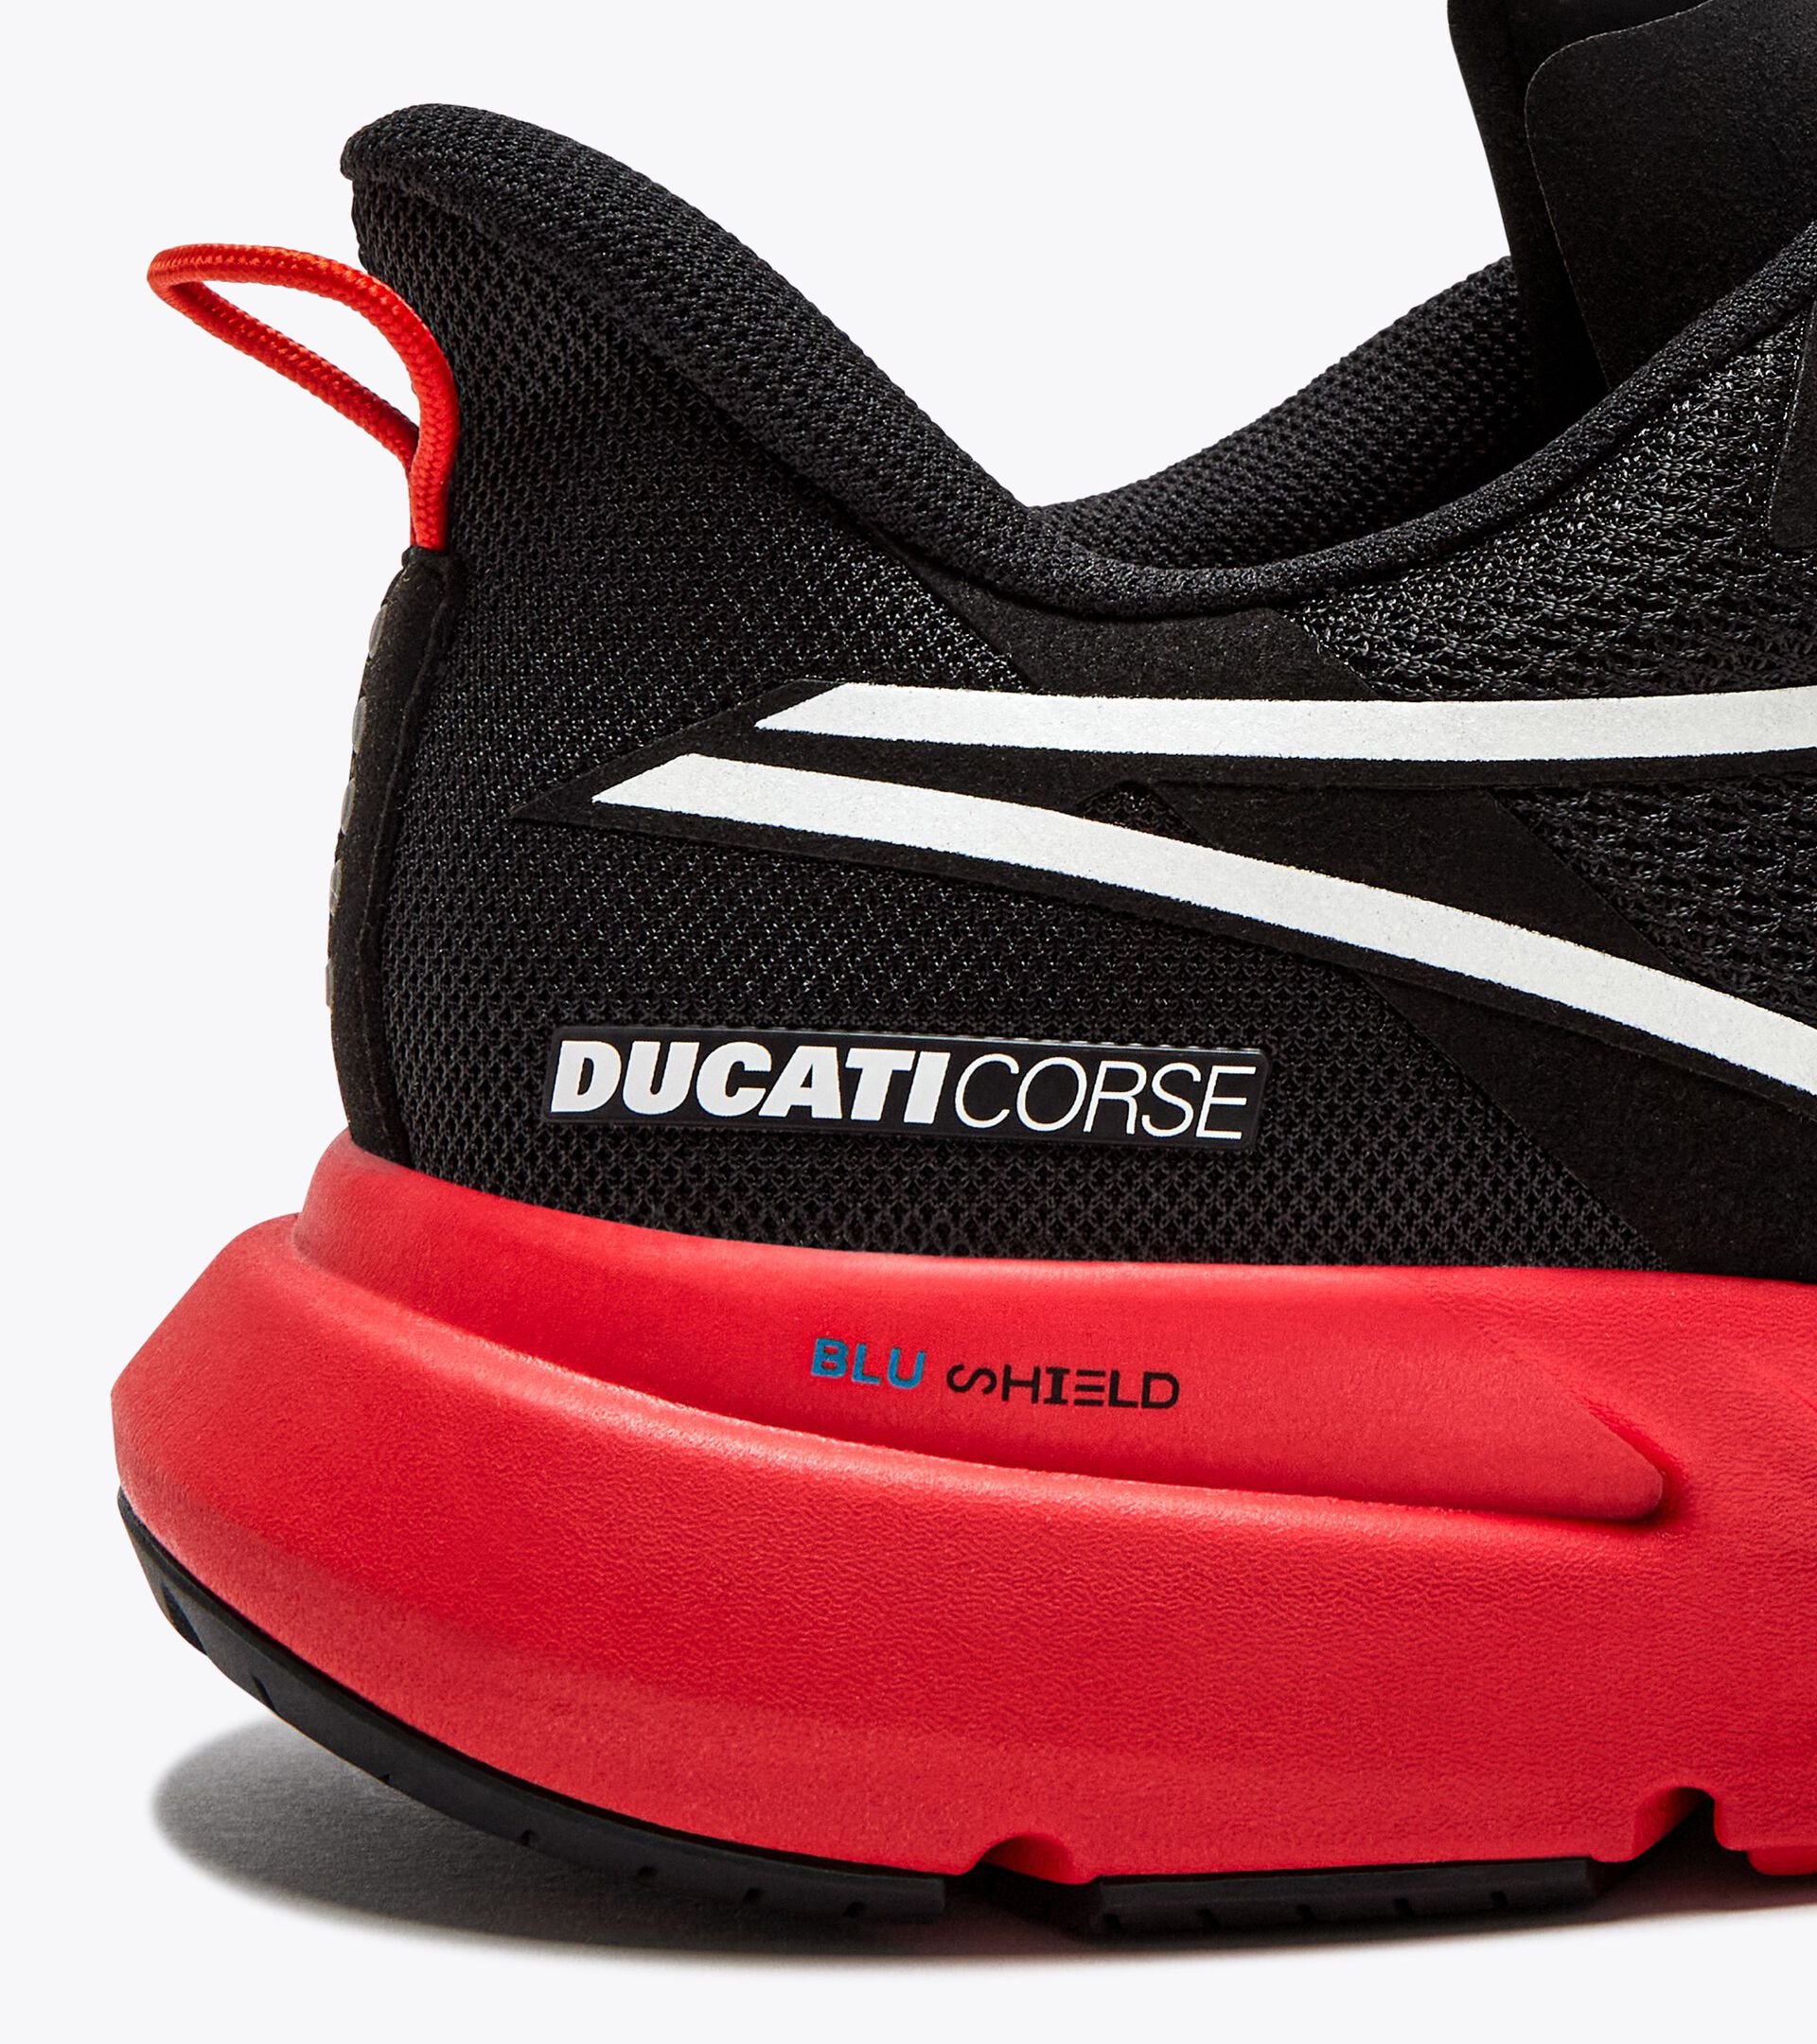 Scarpa da running diadora X Ducati Corse - Uomo  DUCATI VELOCE 4 NERO/ROSSO DUCATI MGP/NERO - Diadora